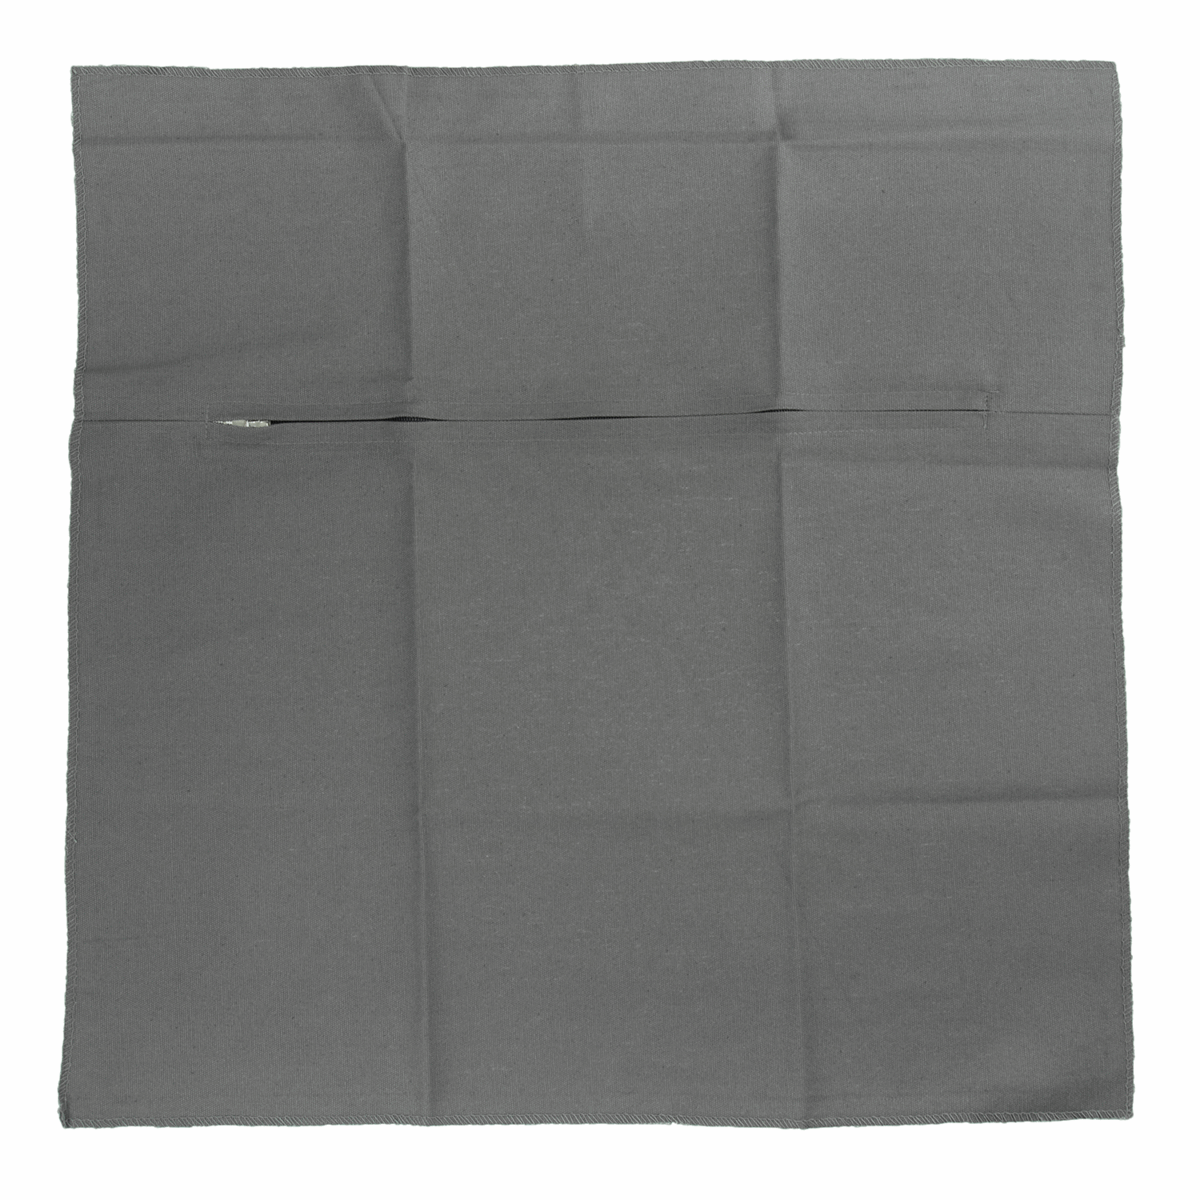 Trimits Grey Cushion Back with Zipper - 45 x 45cm (18 x 18in)